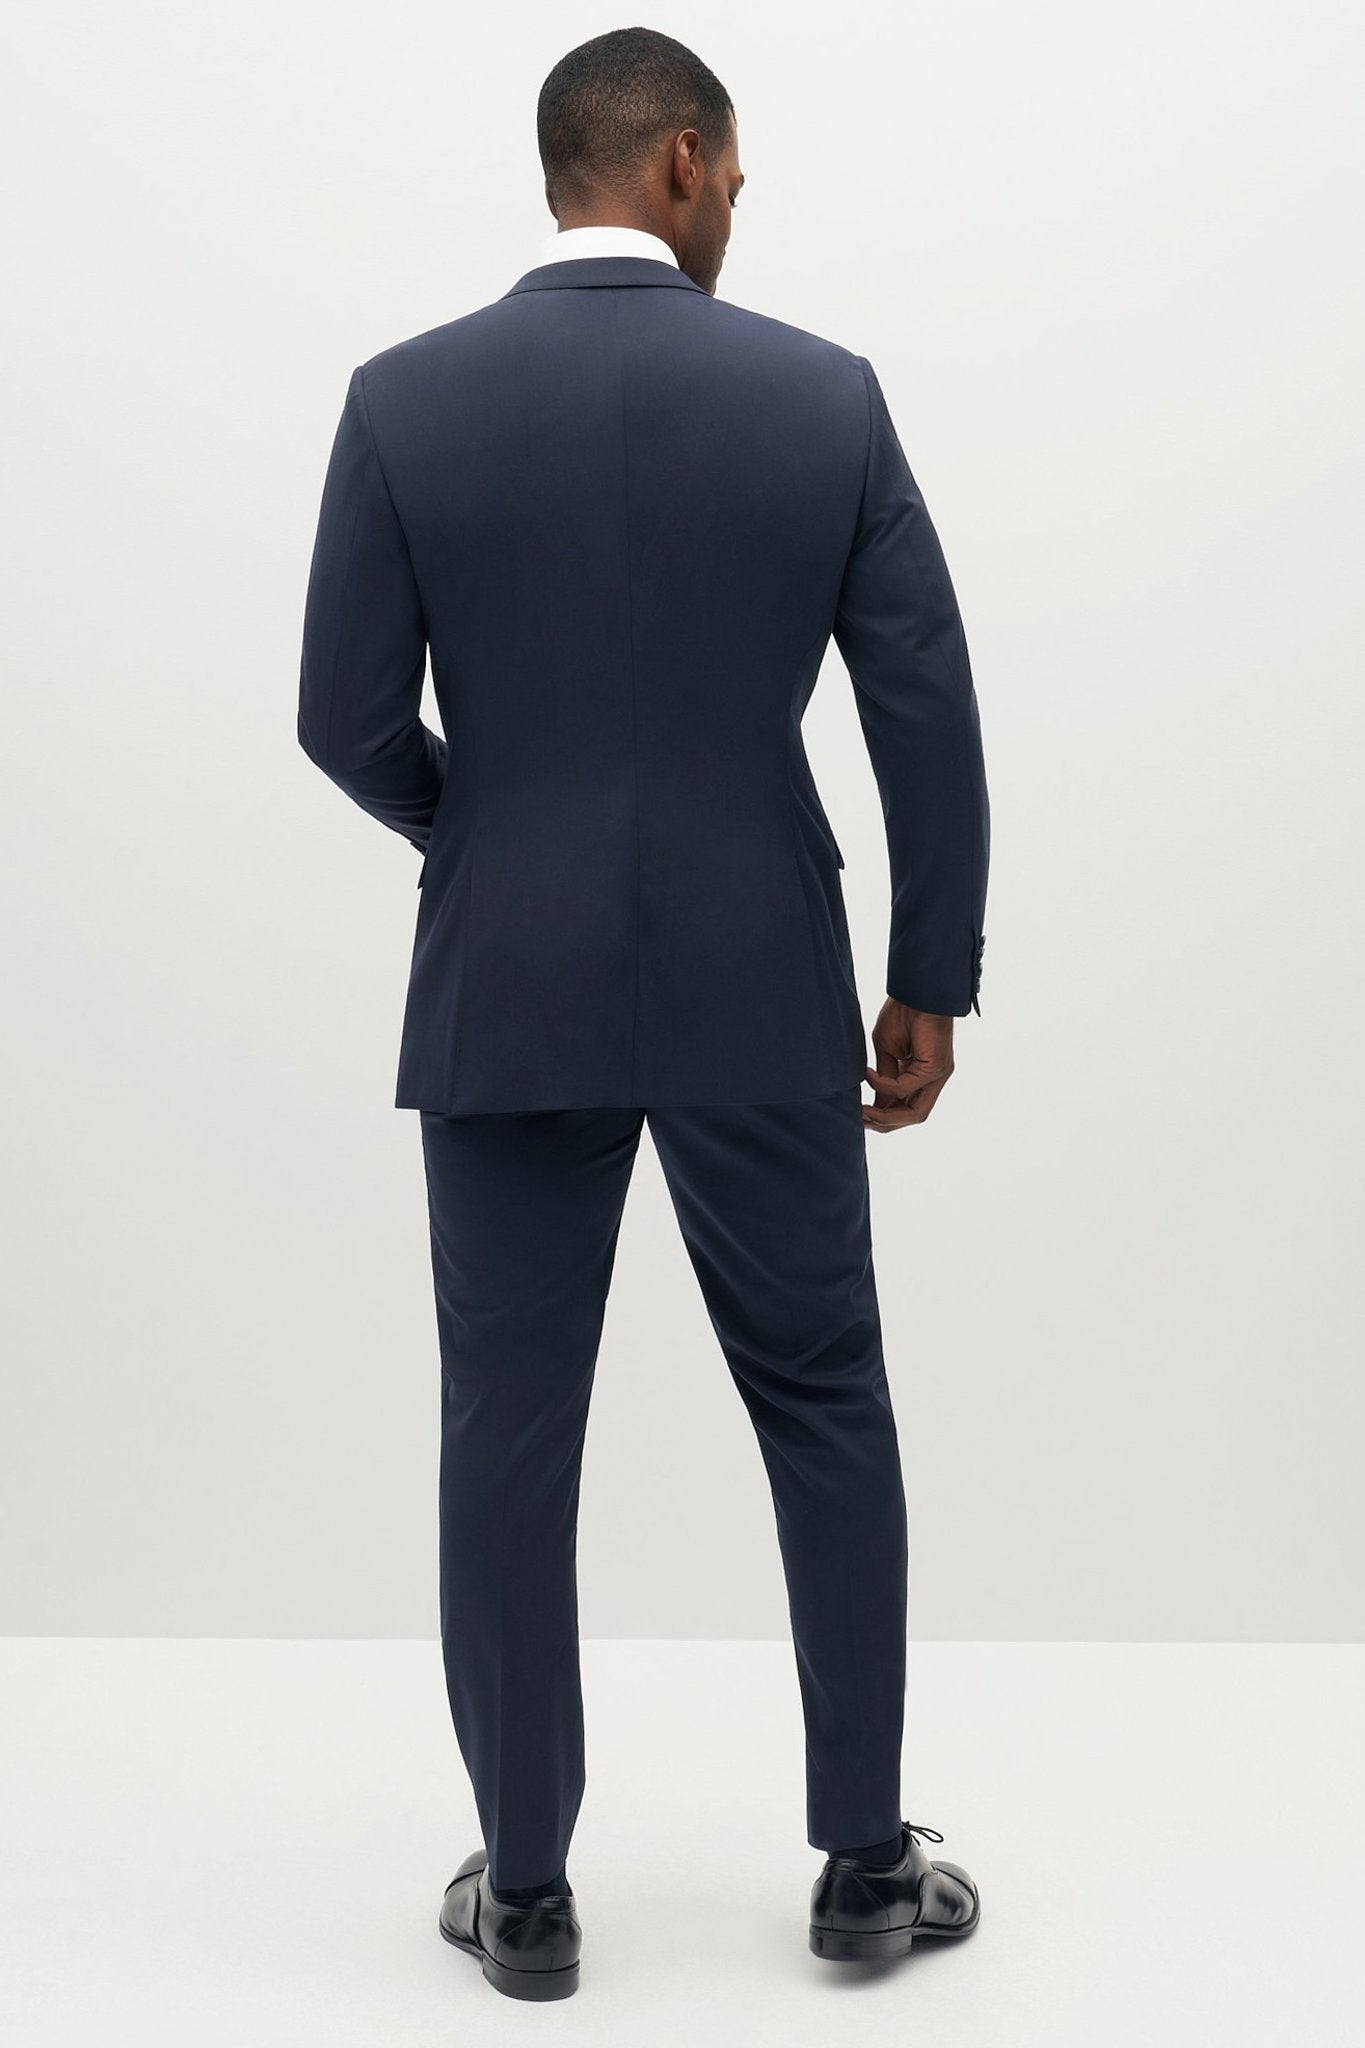 Navy Blue Groomsmen Suit by SuitShop, back view